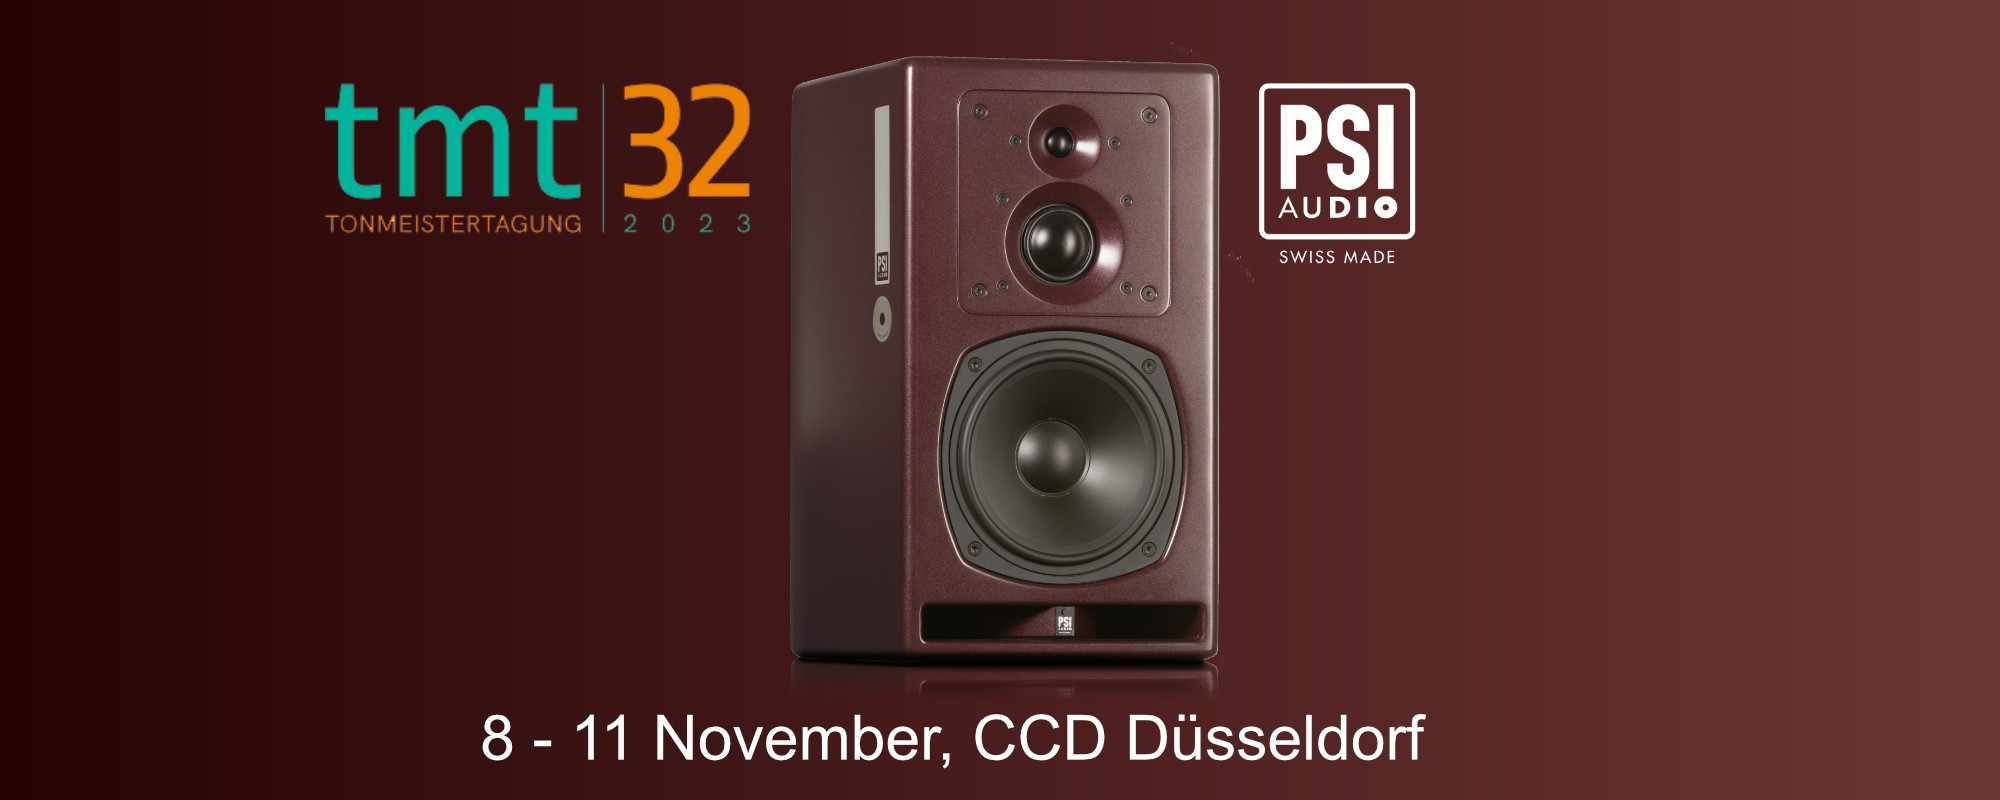 PSI Audio @ Tonmeistertagung 2023, Düsseldorf